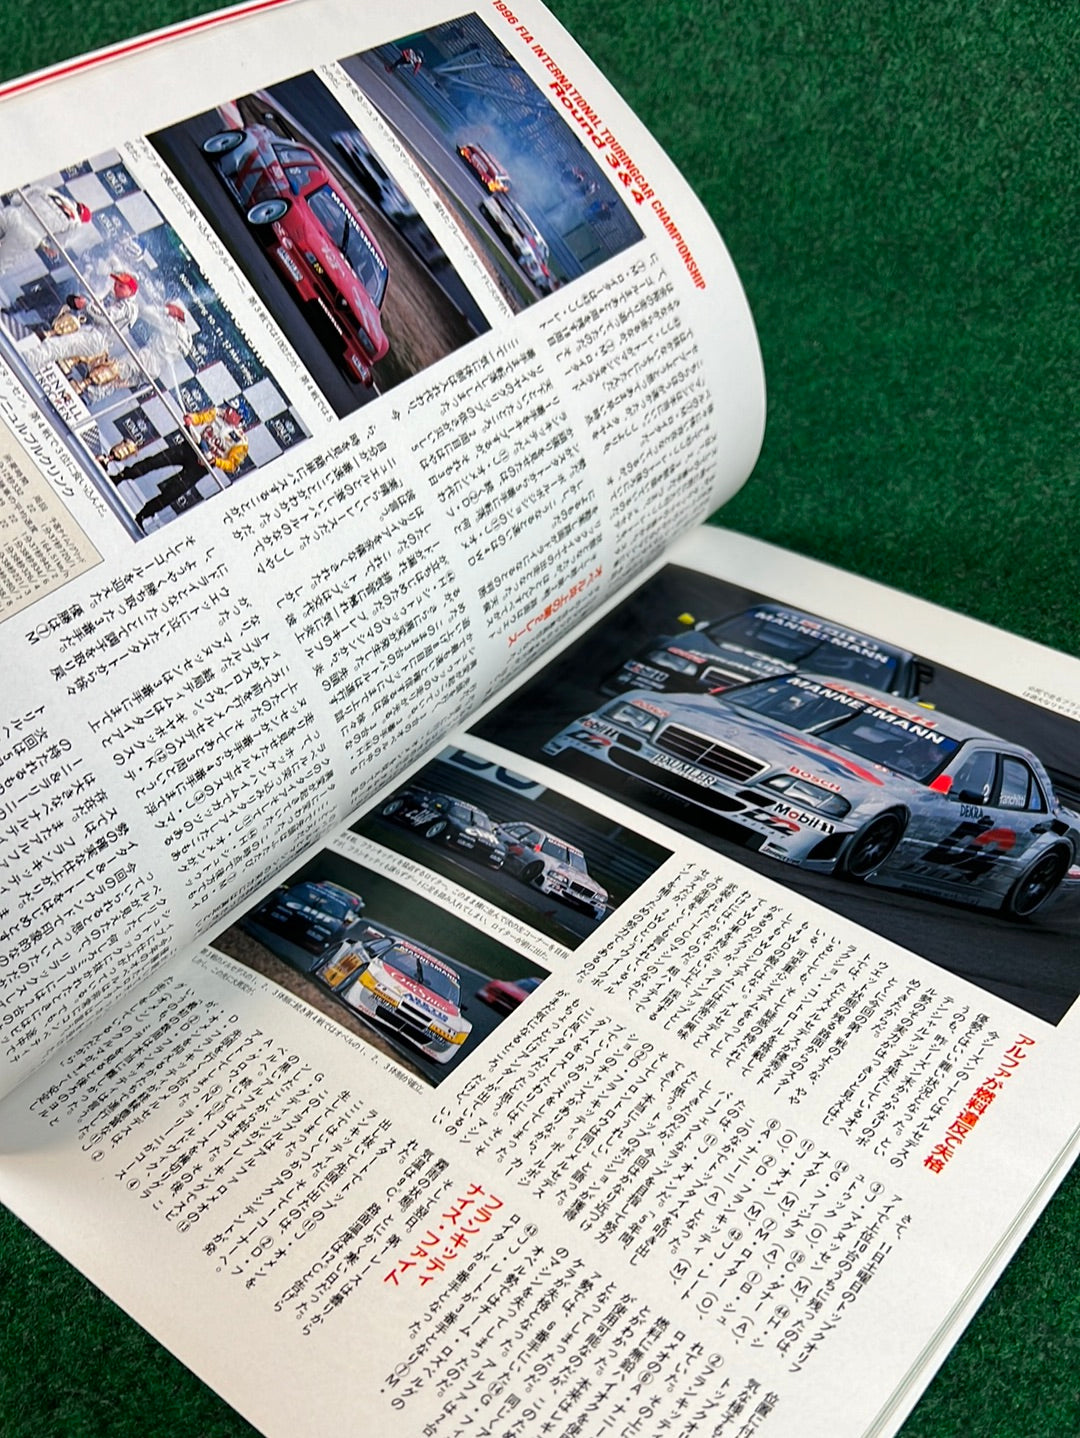 Auto Sport Magazine - 7/1-8/1 1996